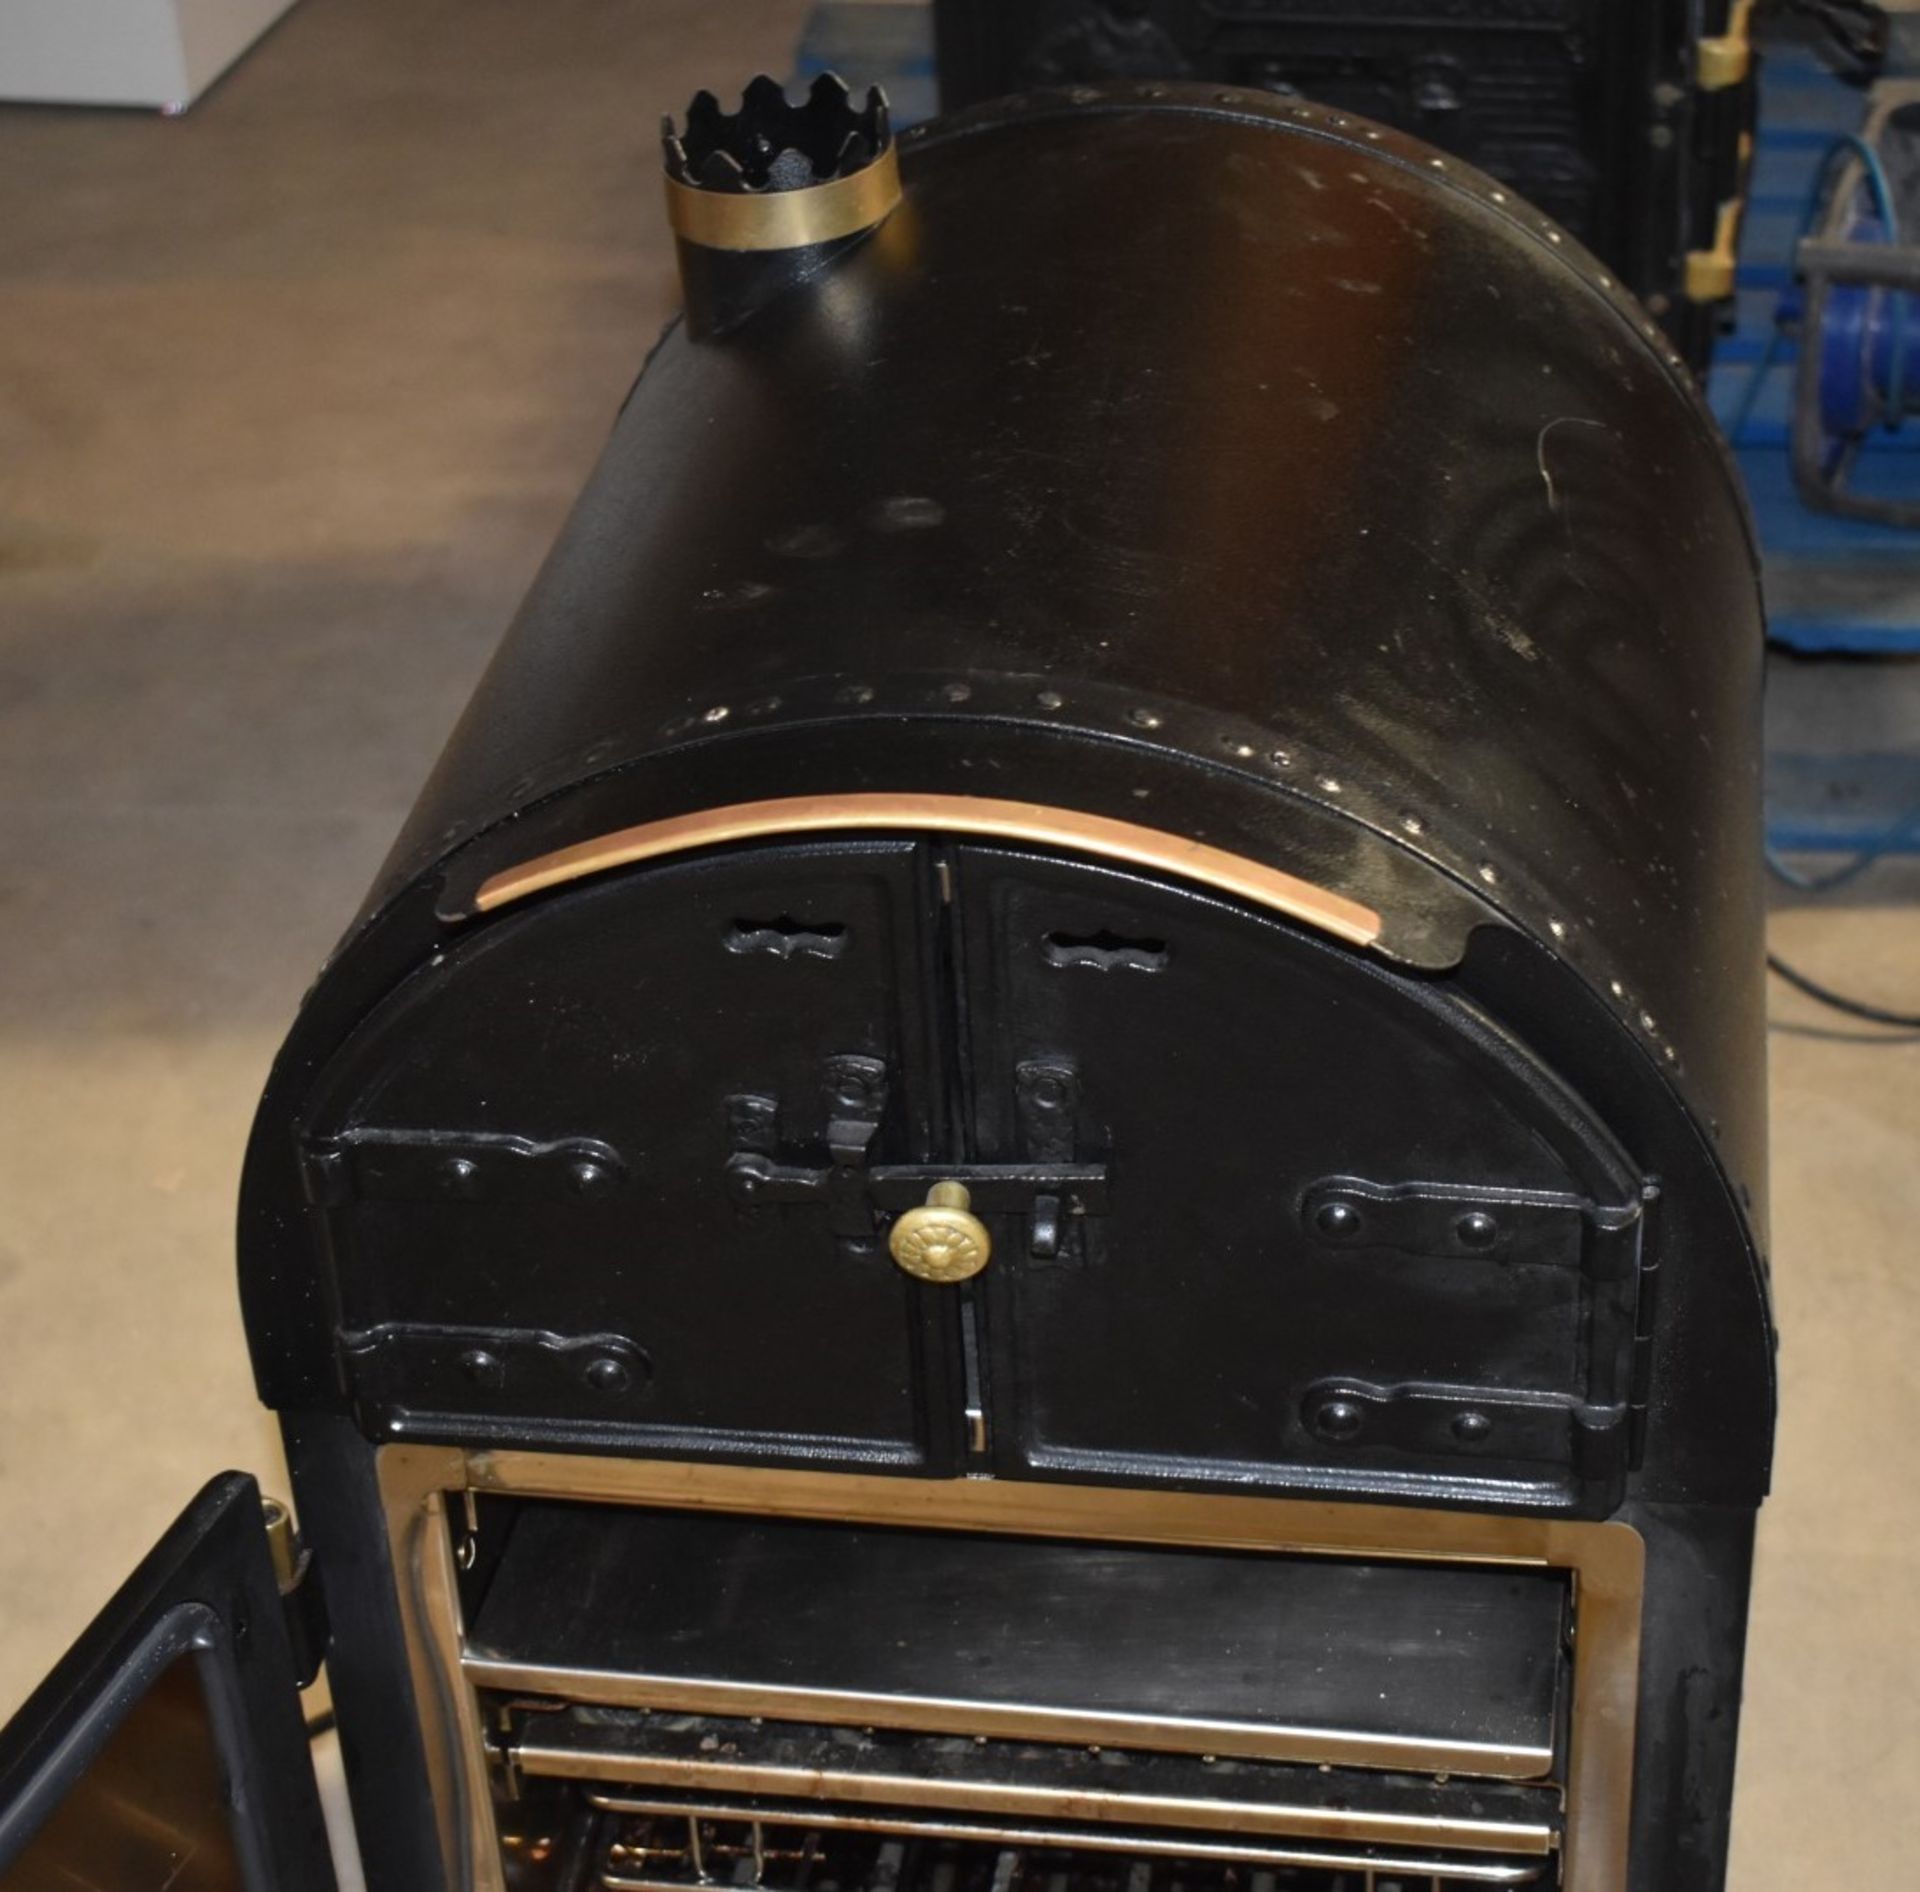 1 x Victorian Village Stove Potato Baking Oven - Model VS - 45 Potato Capacity - Approx RRP £2,600 - Image 16 of 18